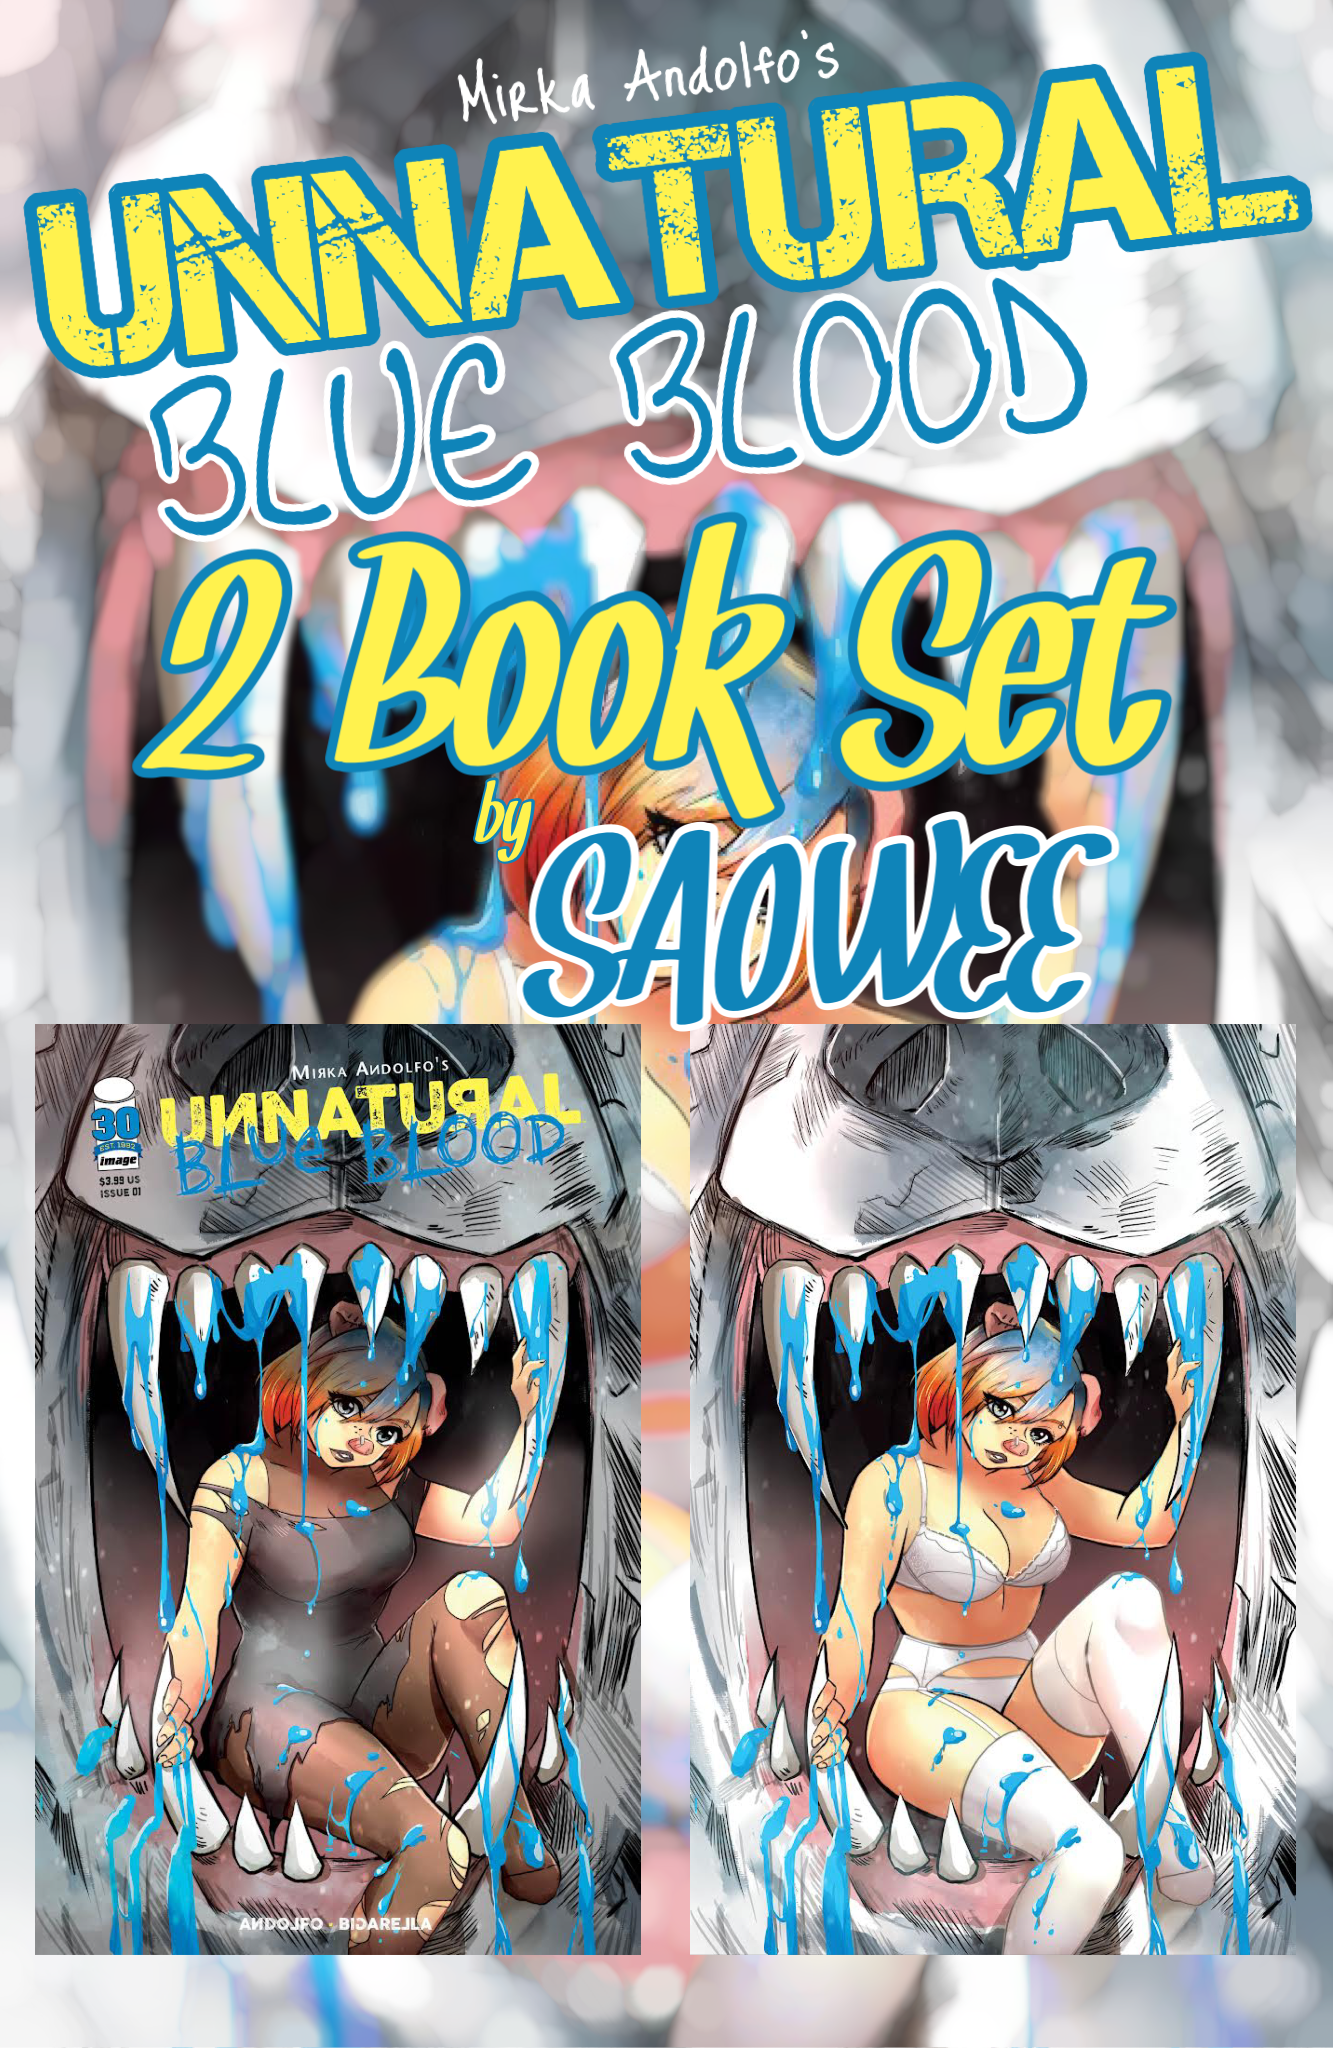 UNNATURAL BLUE BLOOD #1 SAOWEE EXCLUSIVE 2 BOOK SET